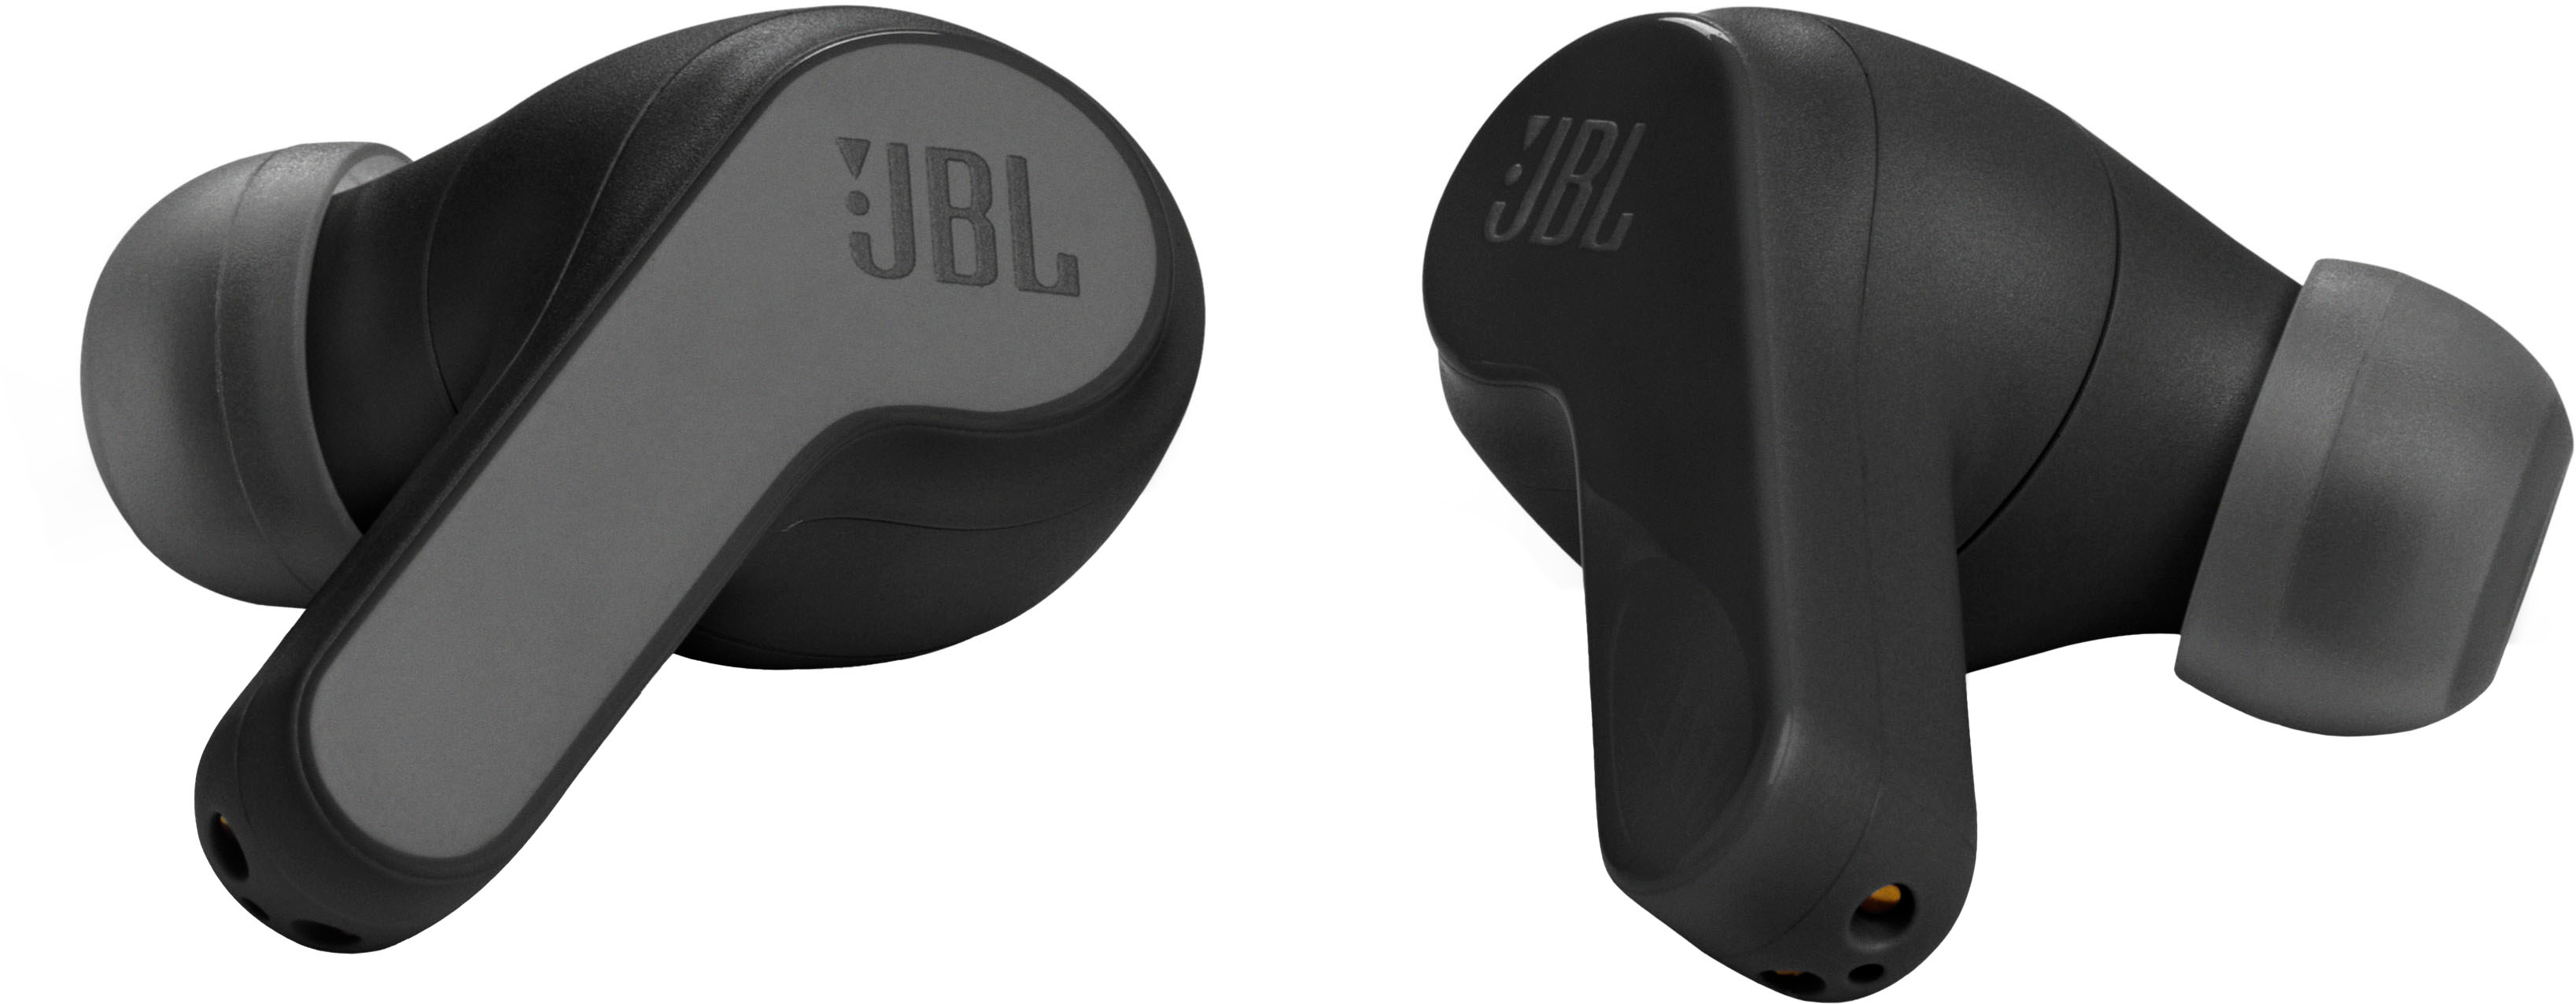 JBL Vibe Buds True Wireless Earbuds Black JBLVBUDSBLKAM - Best Buy